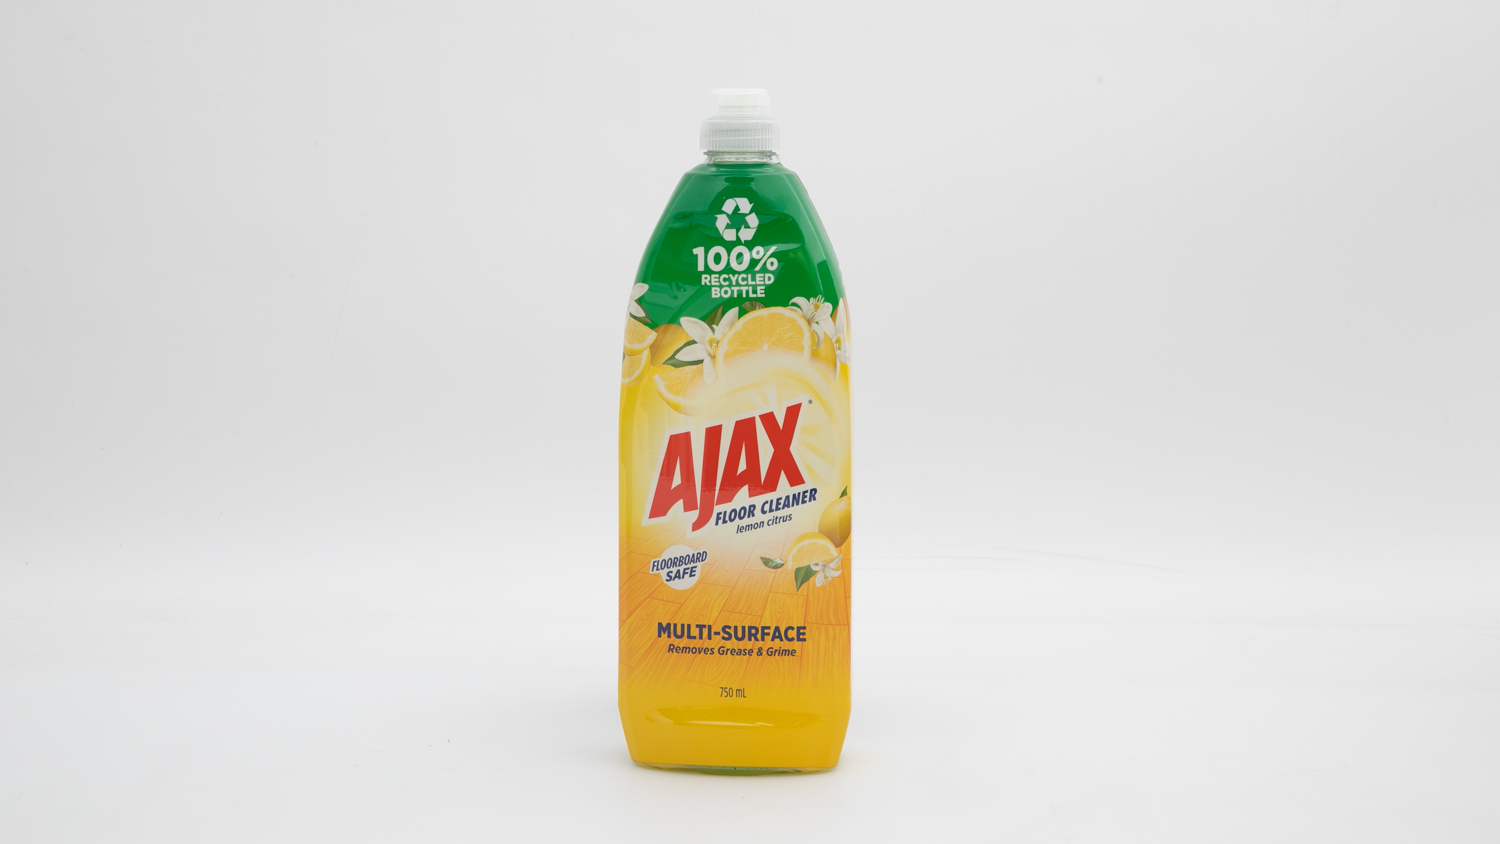 Ajax Floor Cleaner Lemon Citrus Multi-Surface carousel image